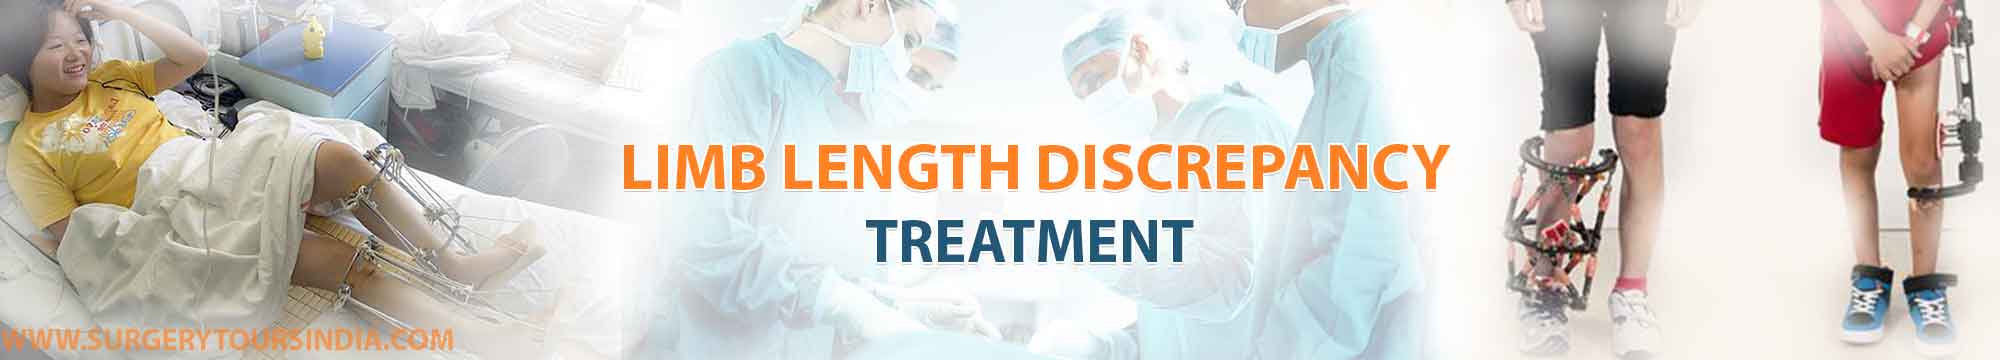 Treatment Options for Limb Length Discrepancy